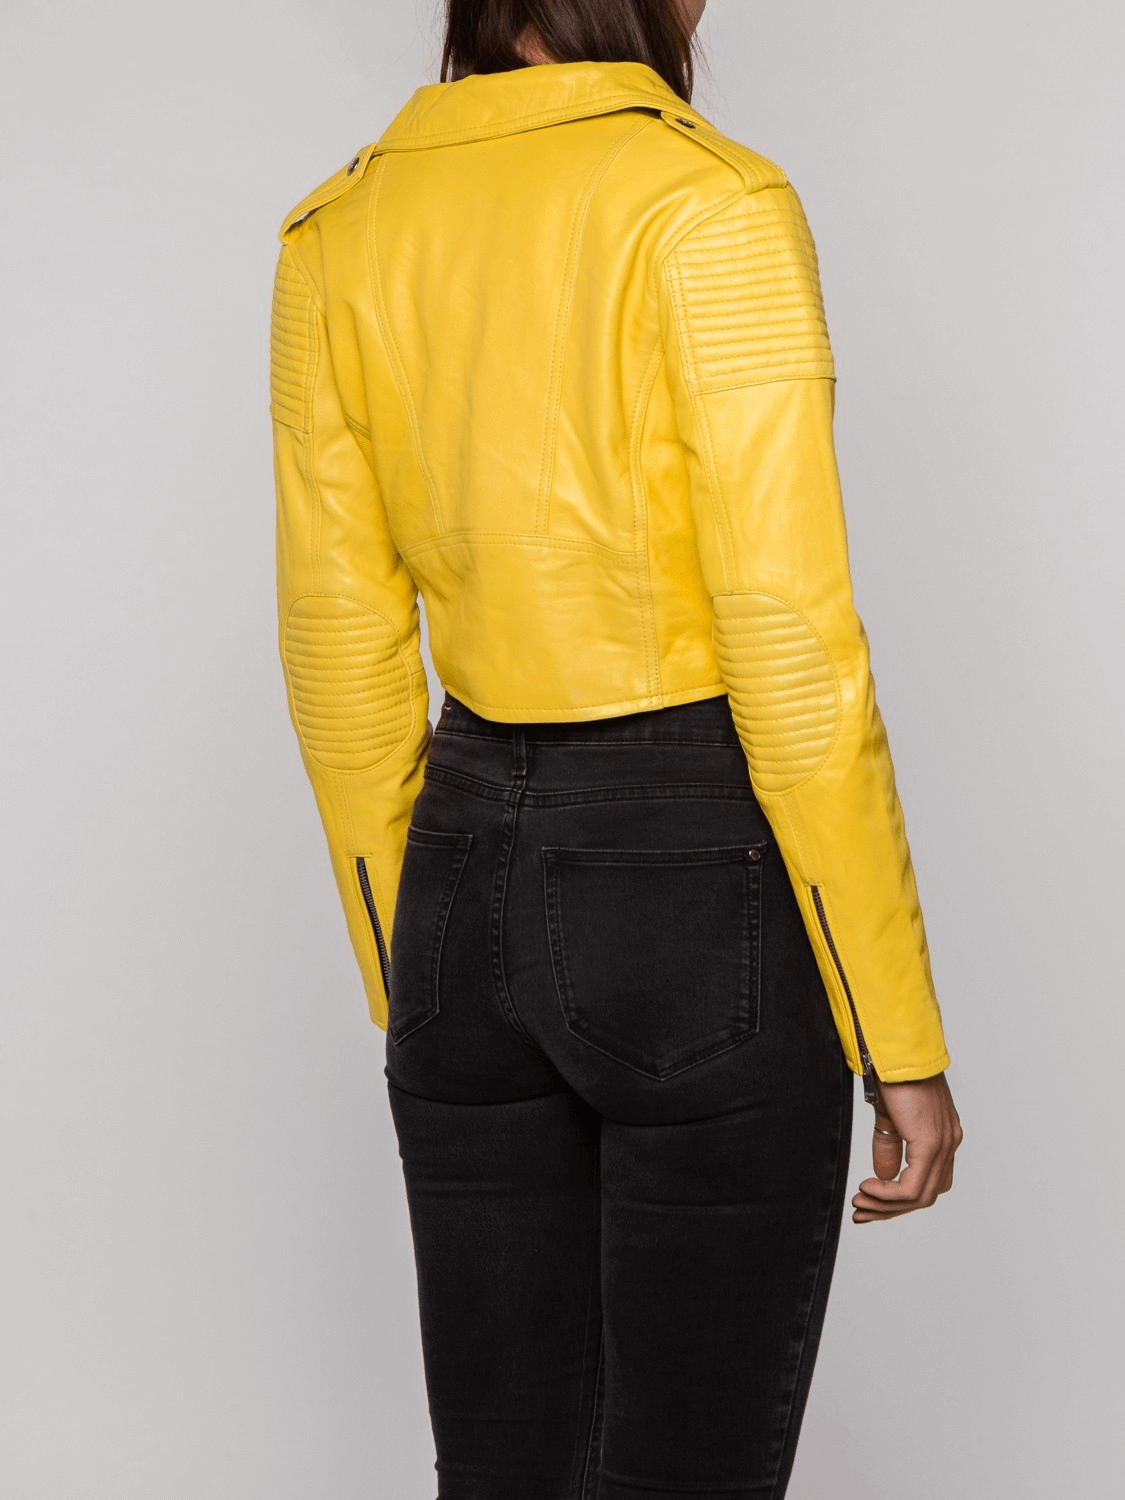 Lily Yellow Biker Leather Jacket